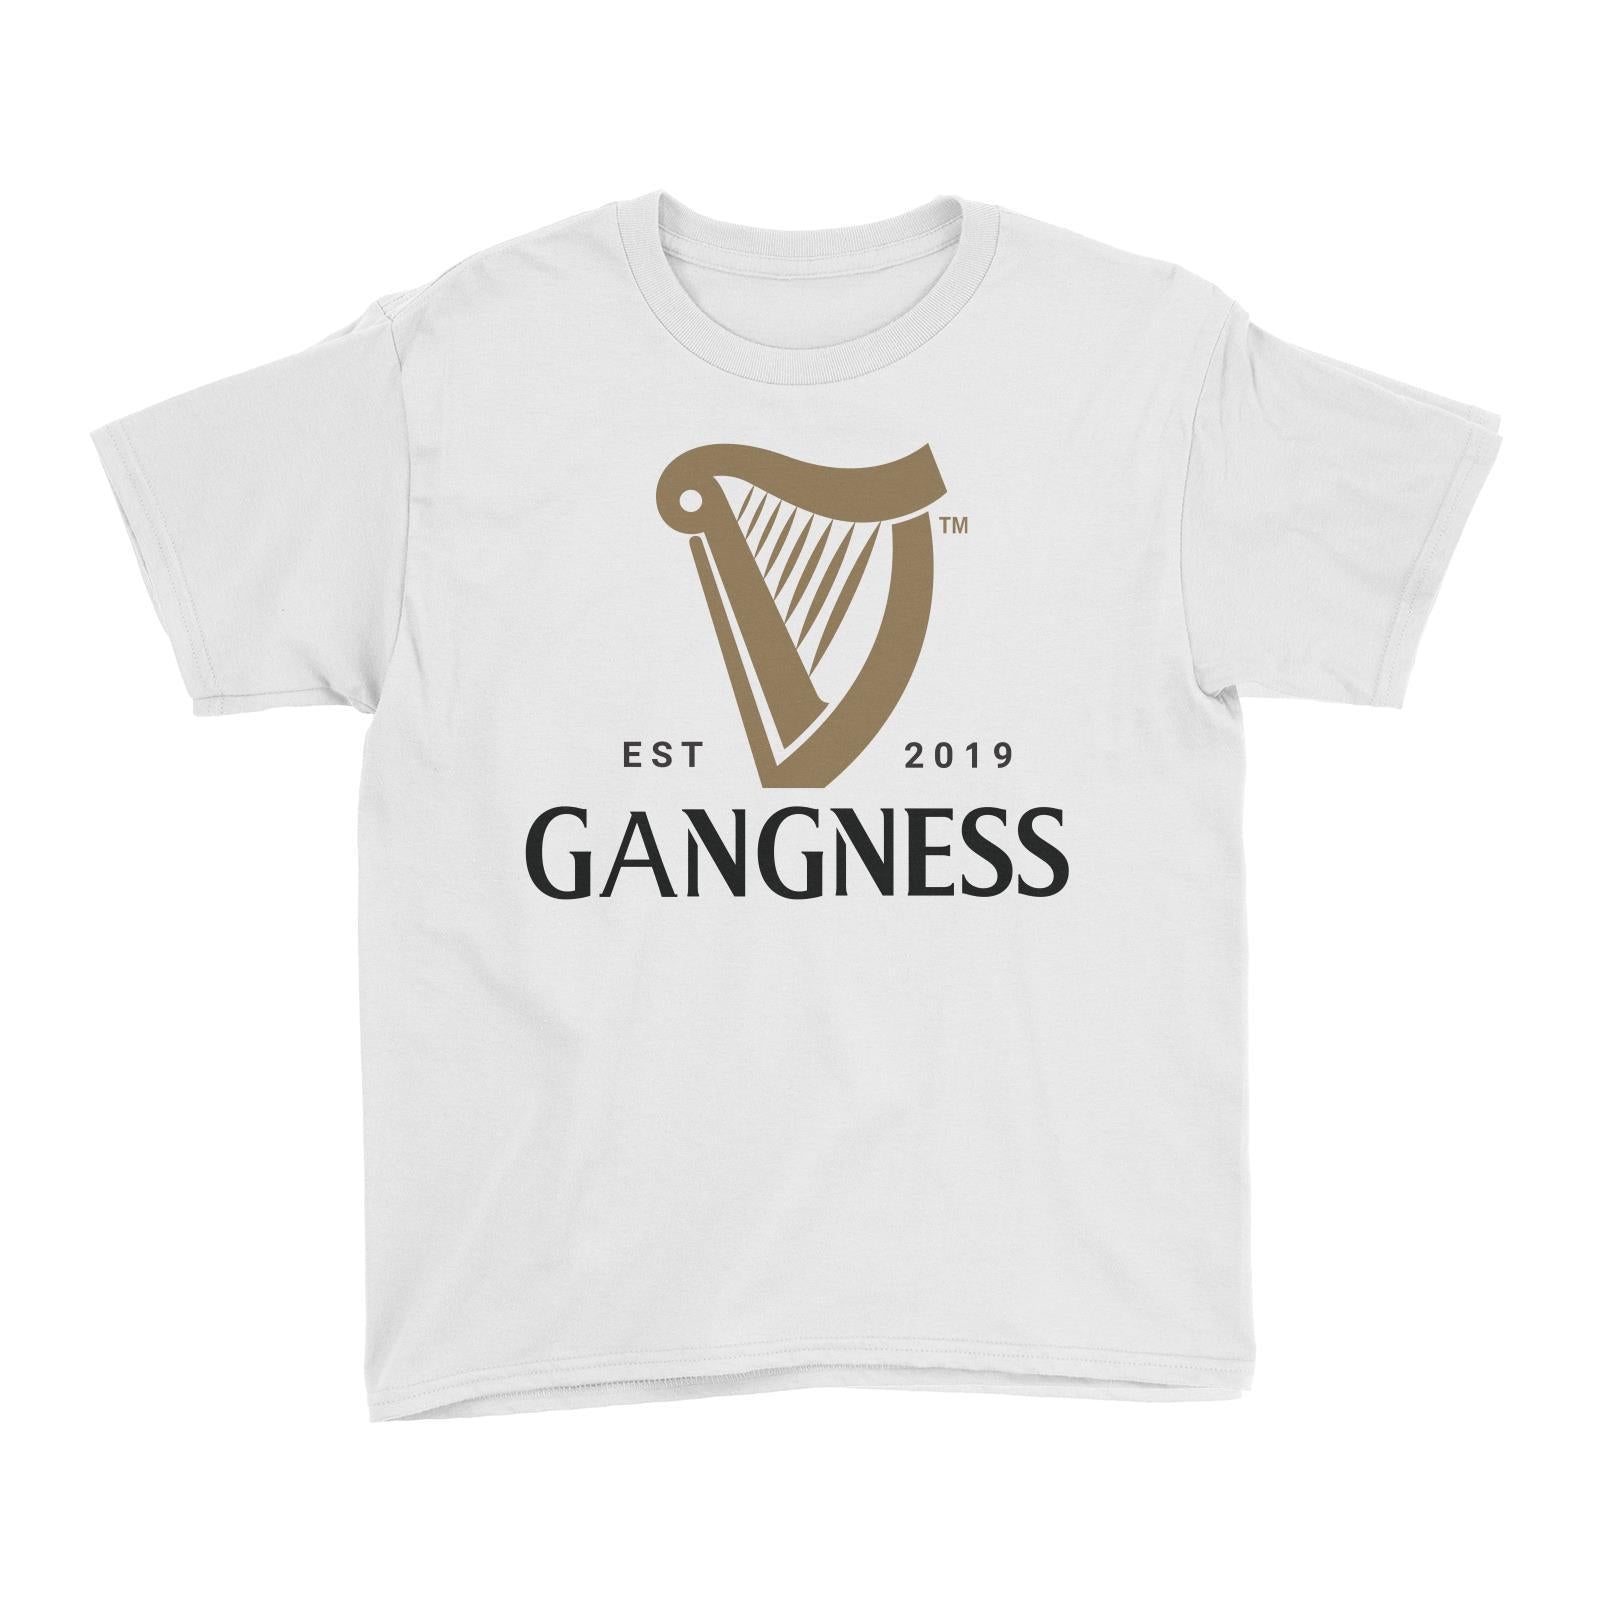 Slang Statement Gangness Kid's T-Shirt